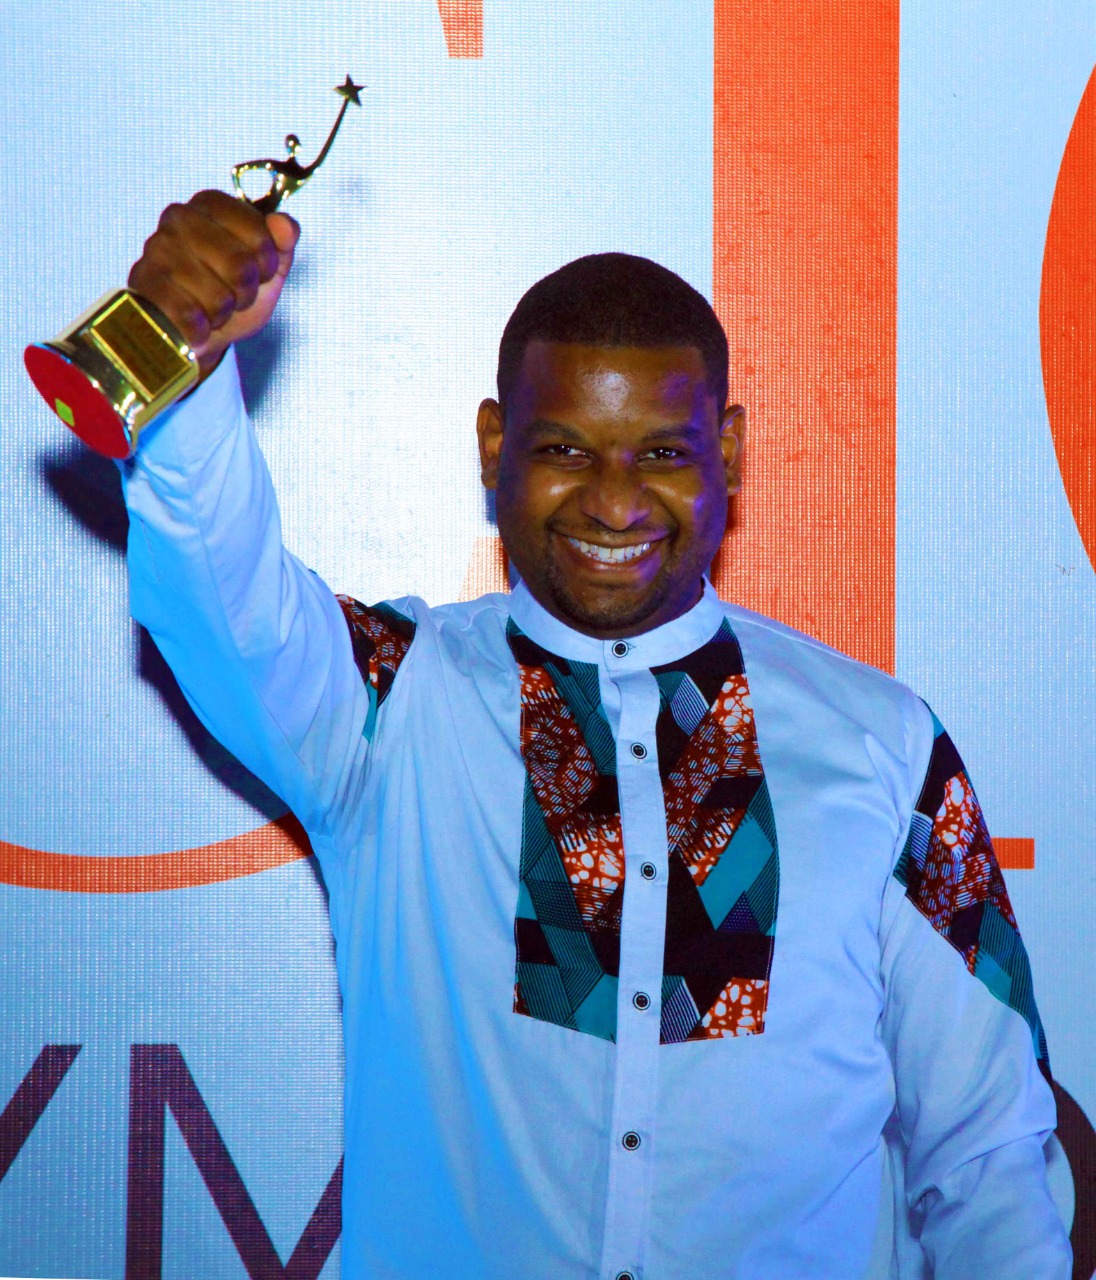 George Njuguna lifts his award after he was pronounced CIO